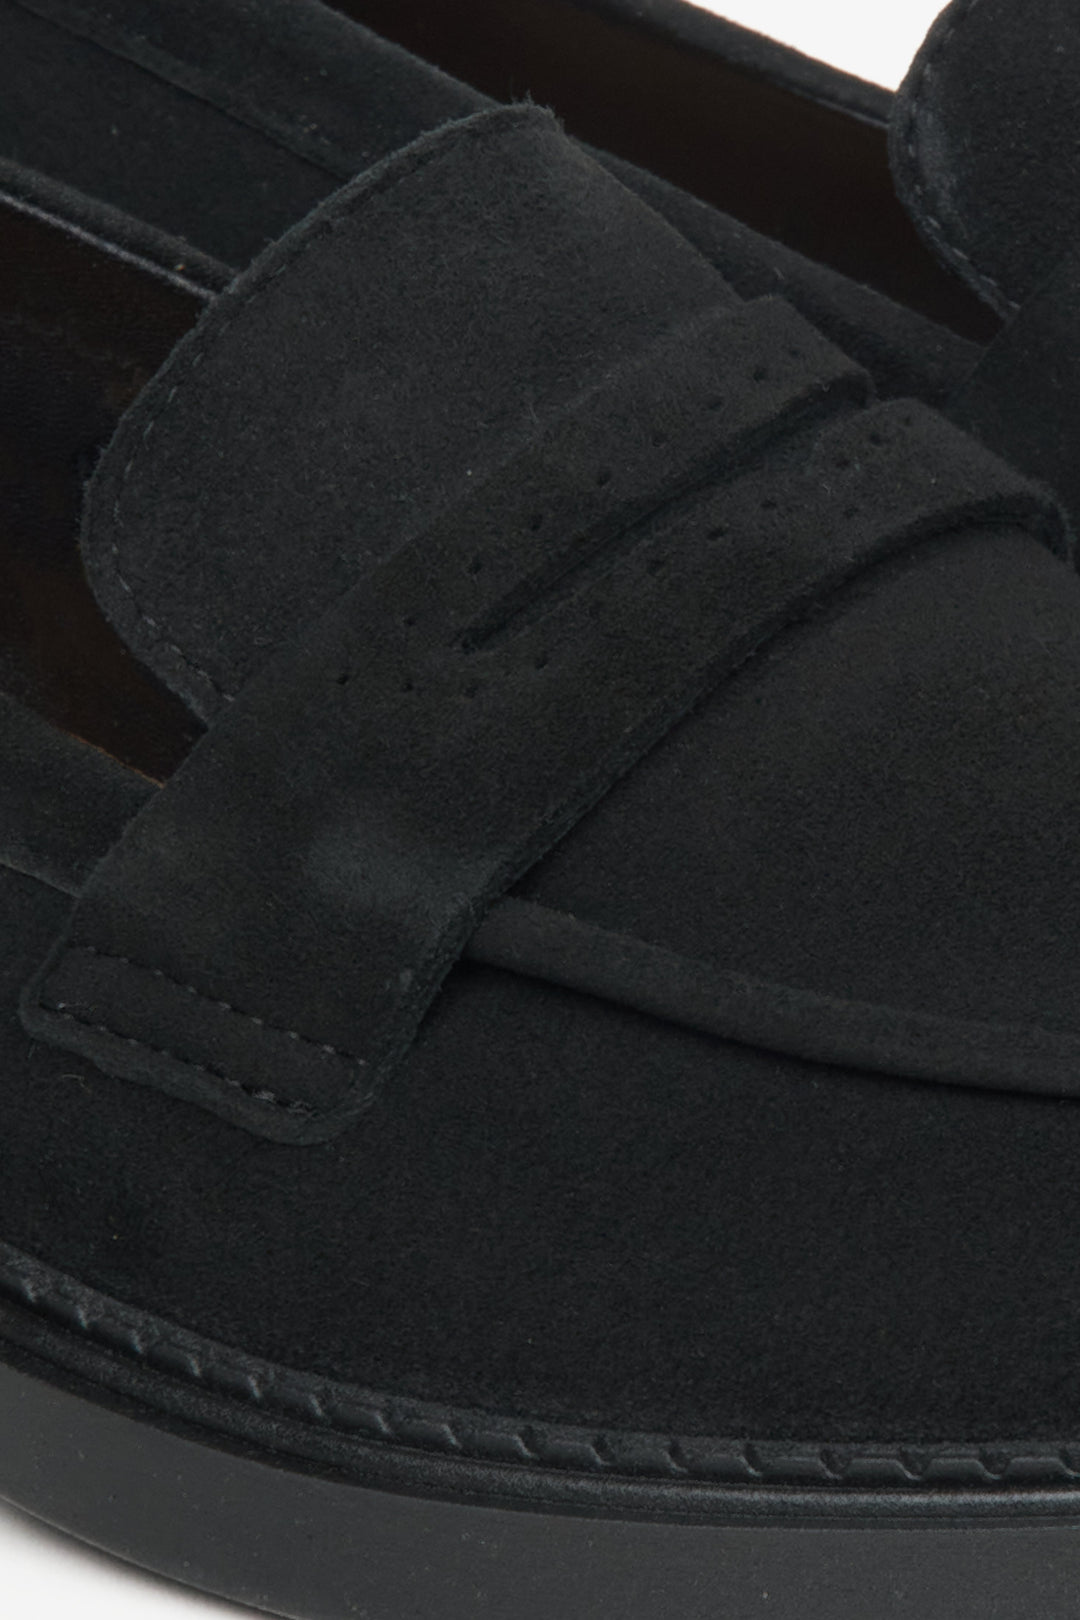 Black velour loafers for women Estro - close-up on details.